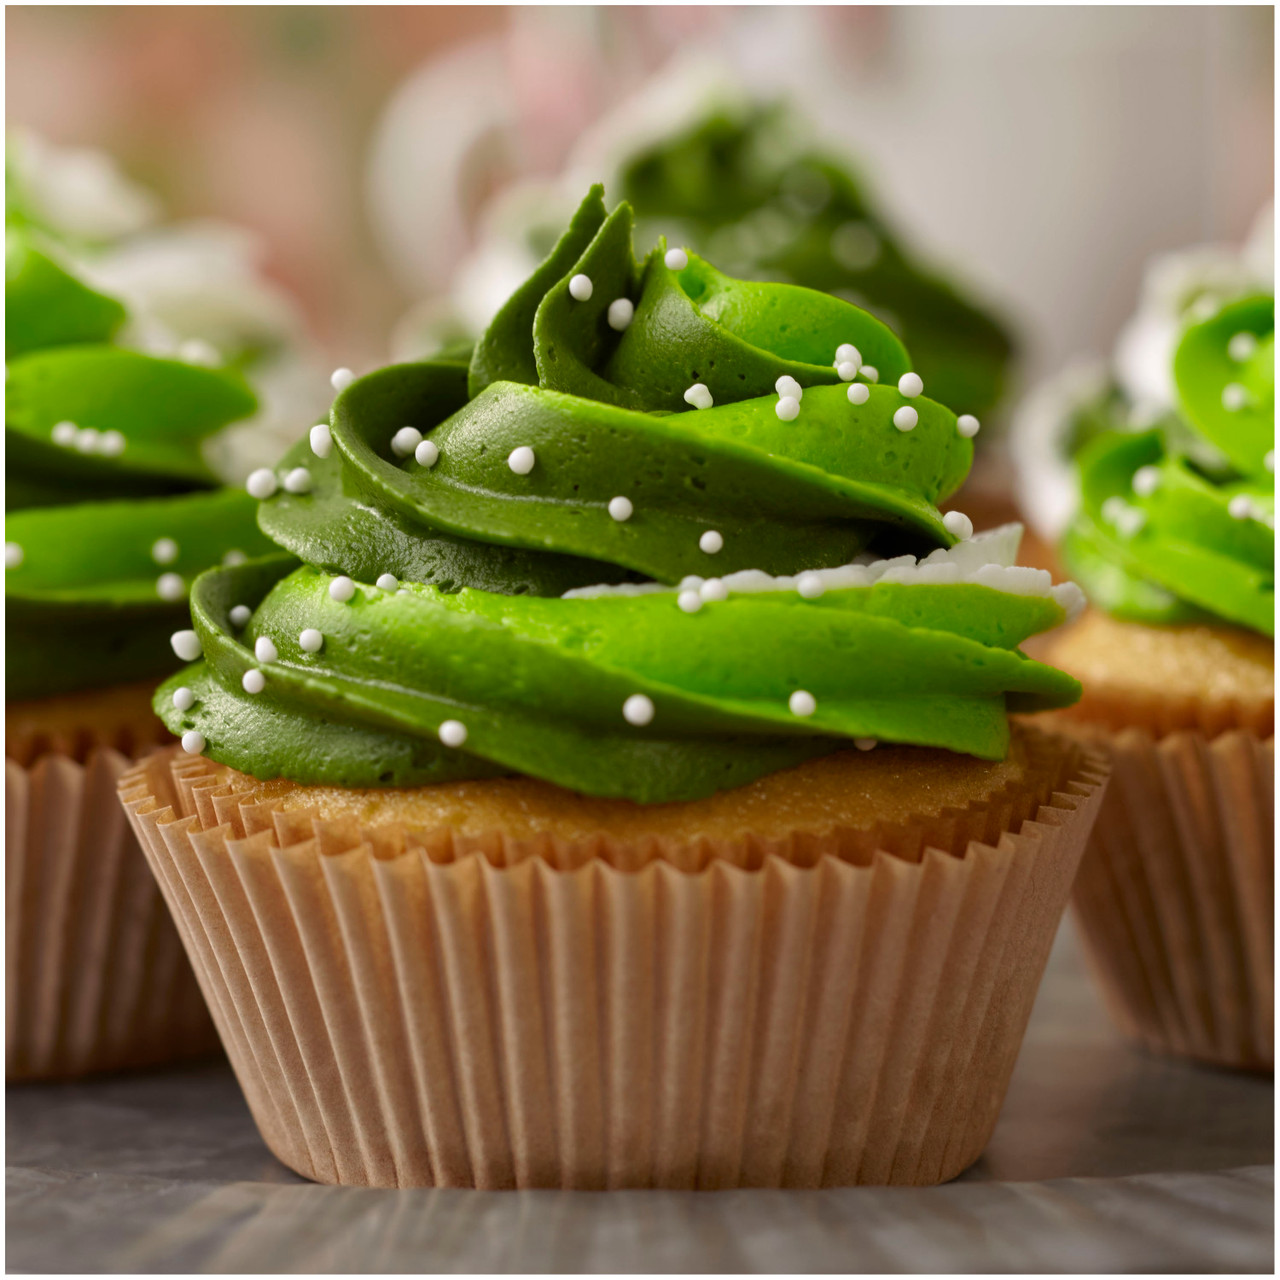 STANDARD Foil Cupcake Baking Liner 50 ct - Light Green